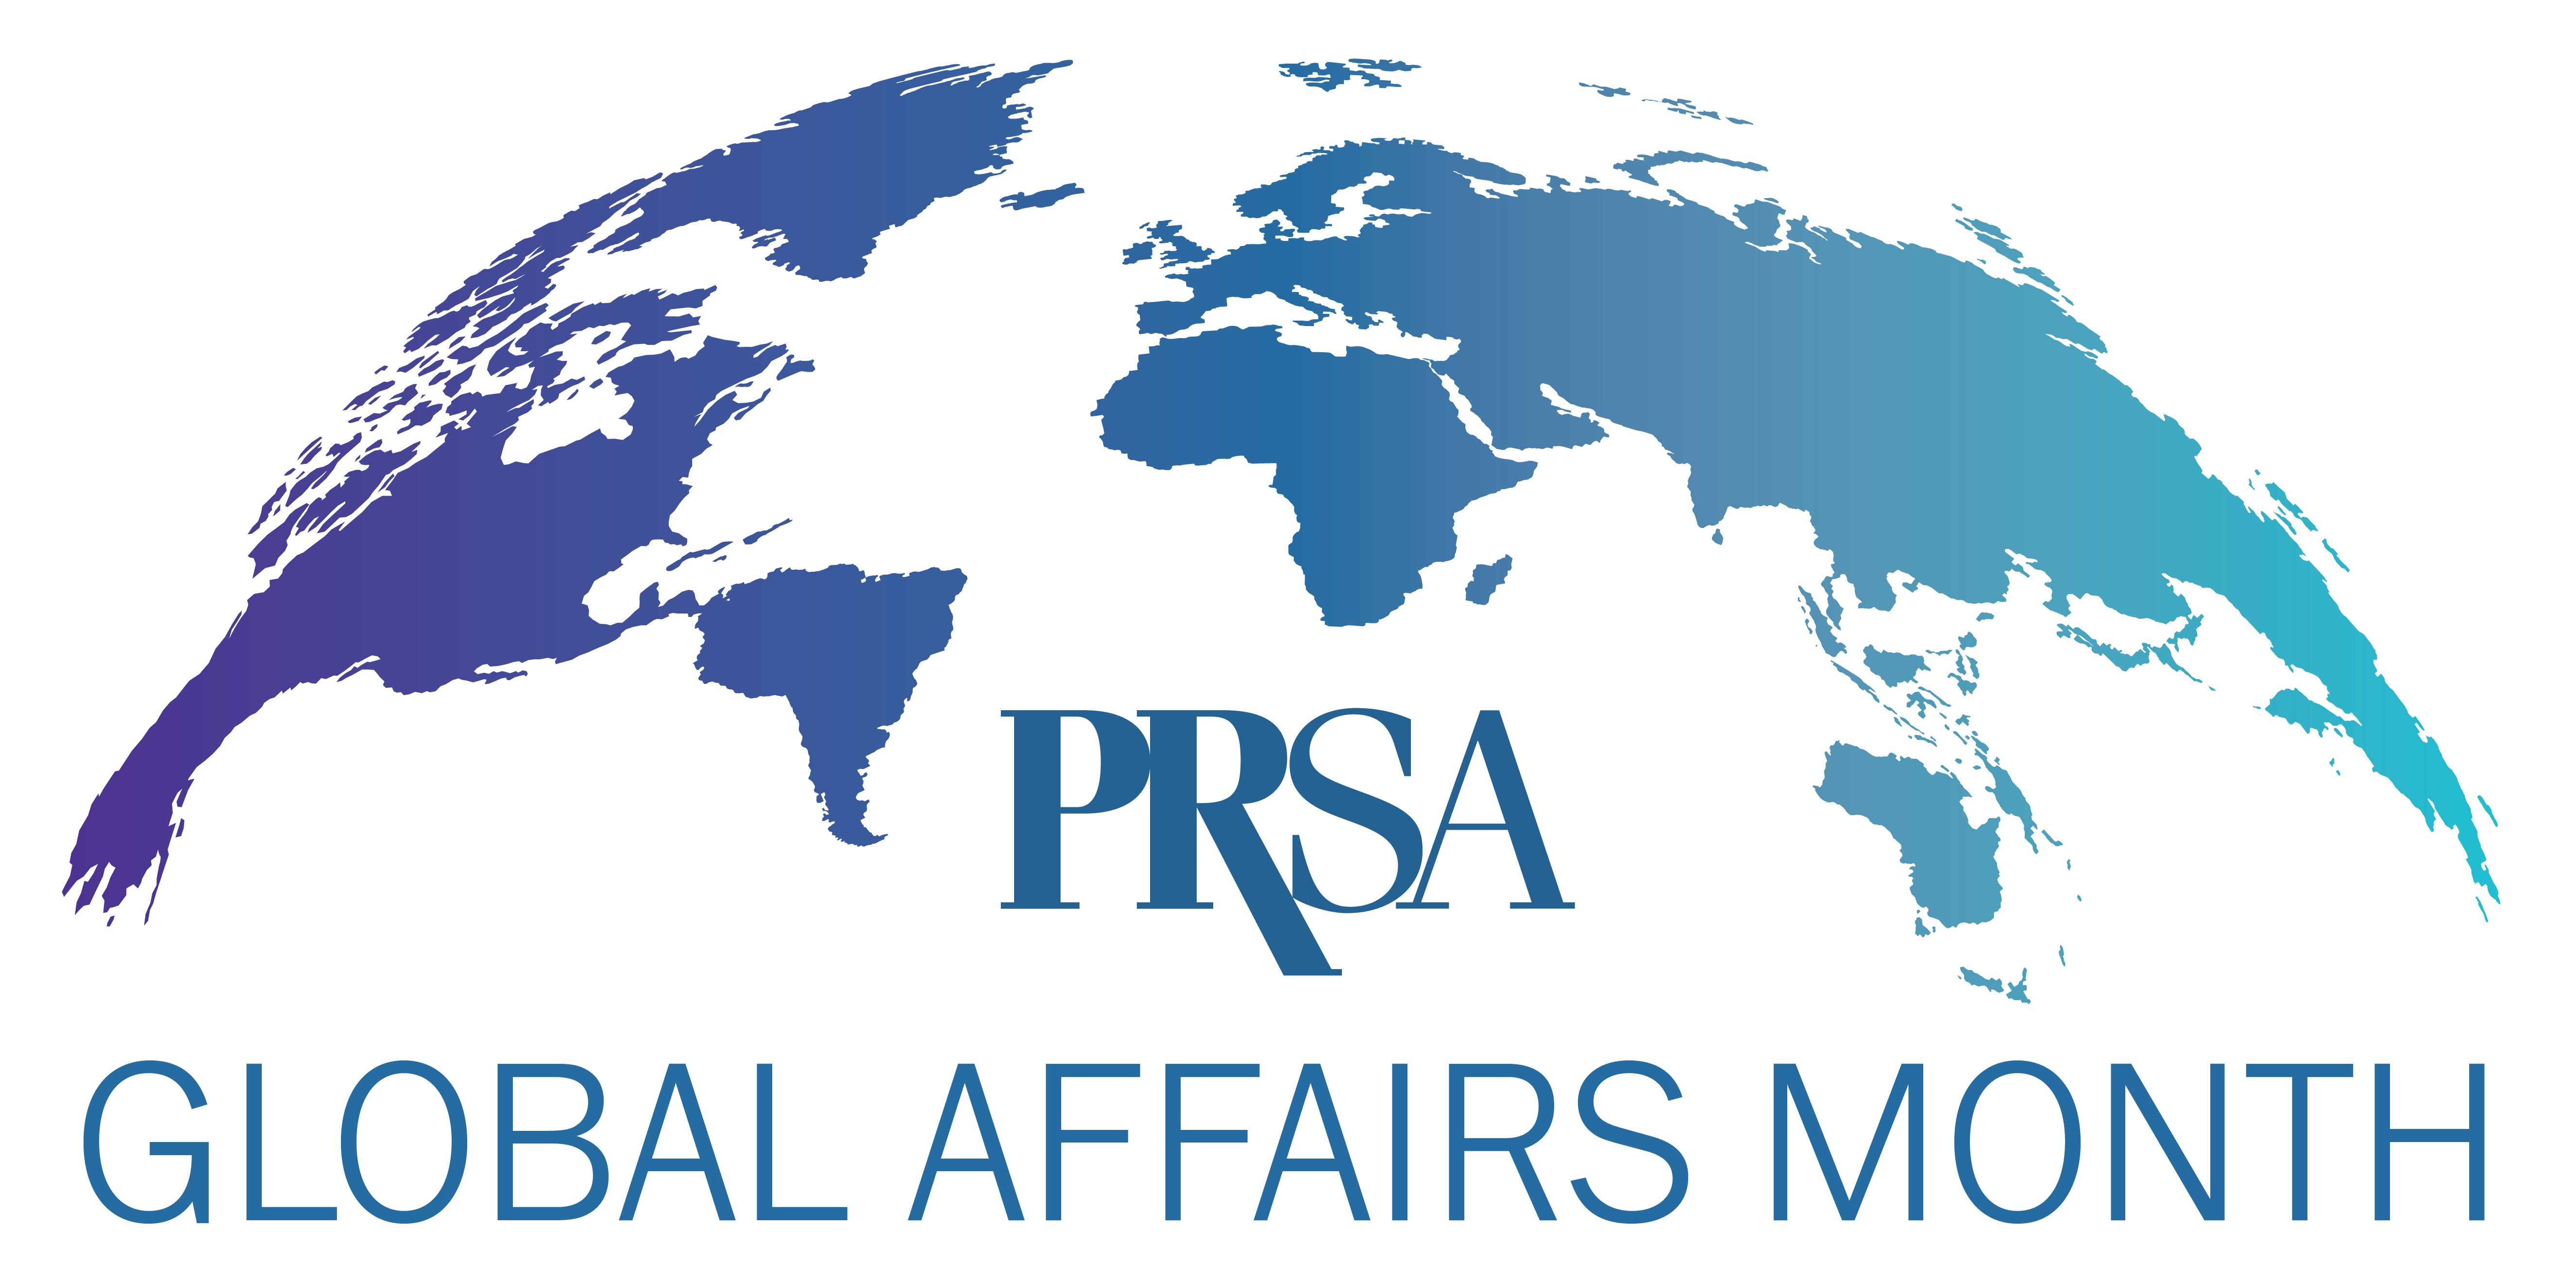 Global Affairs Logo